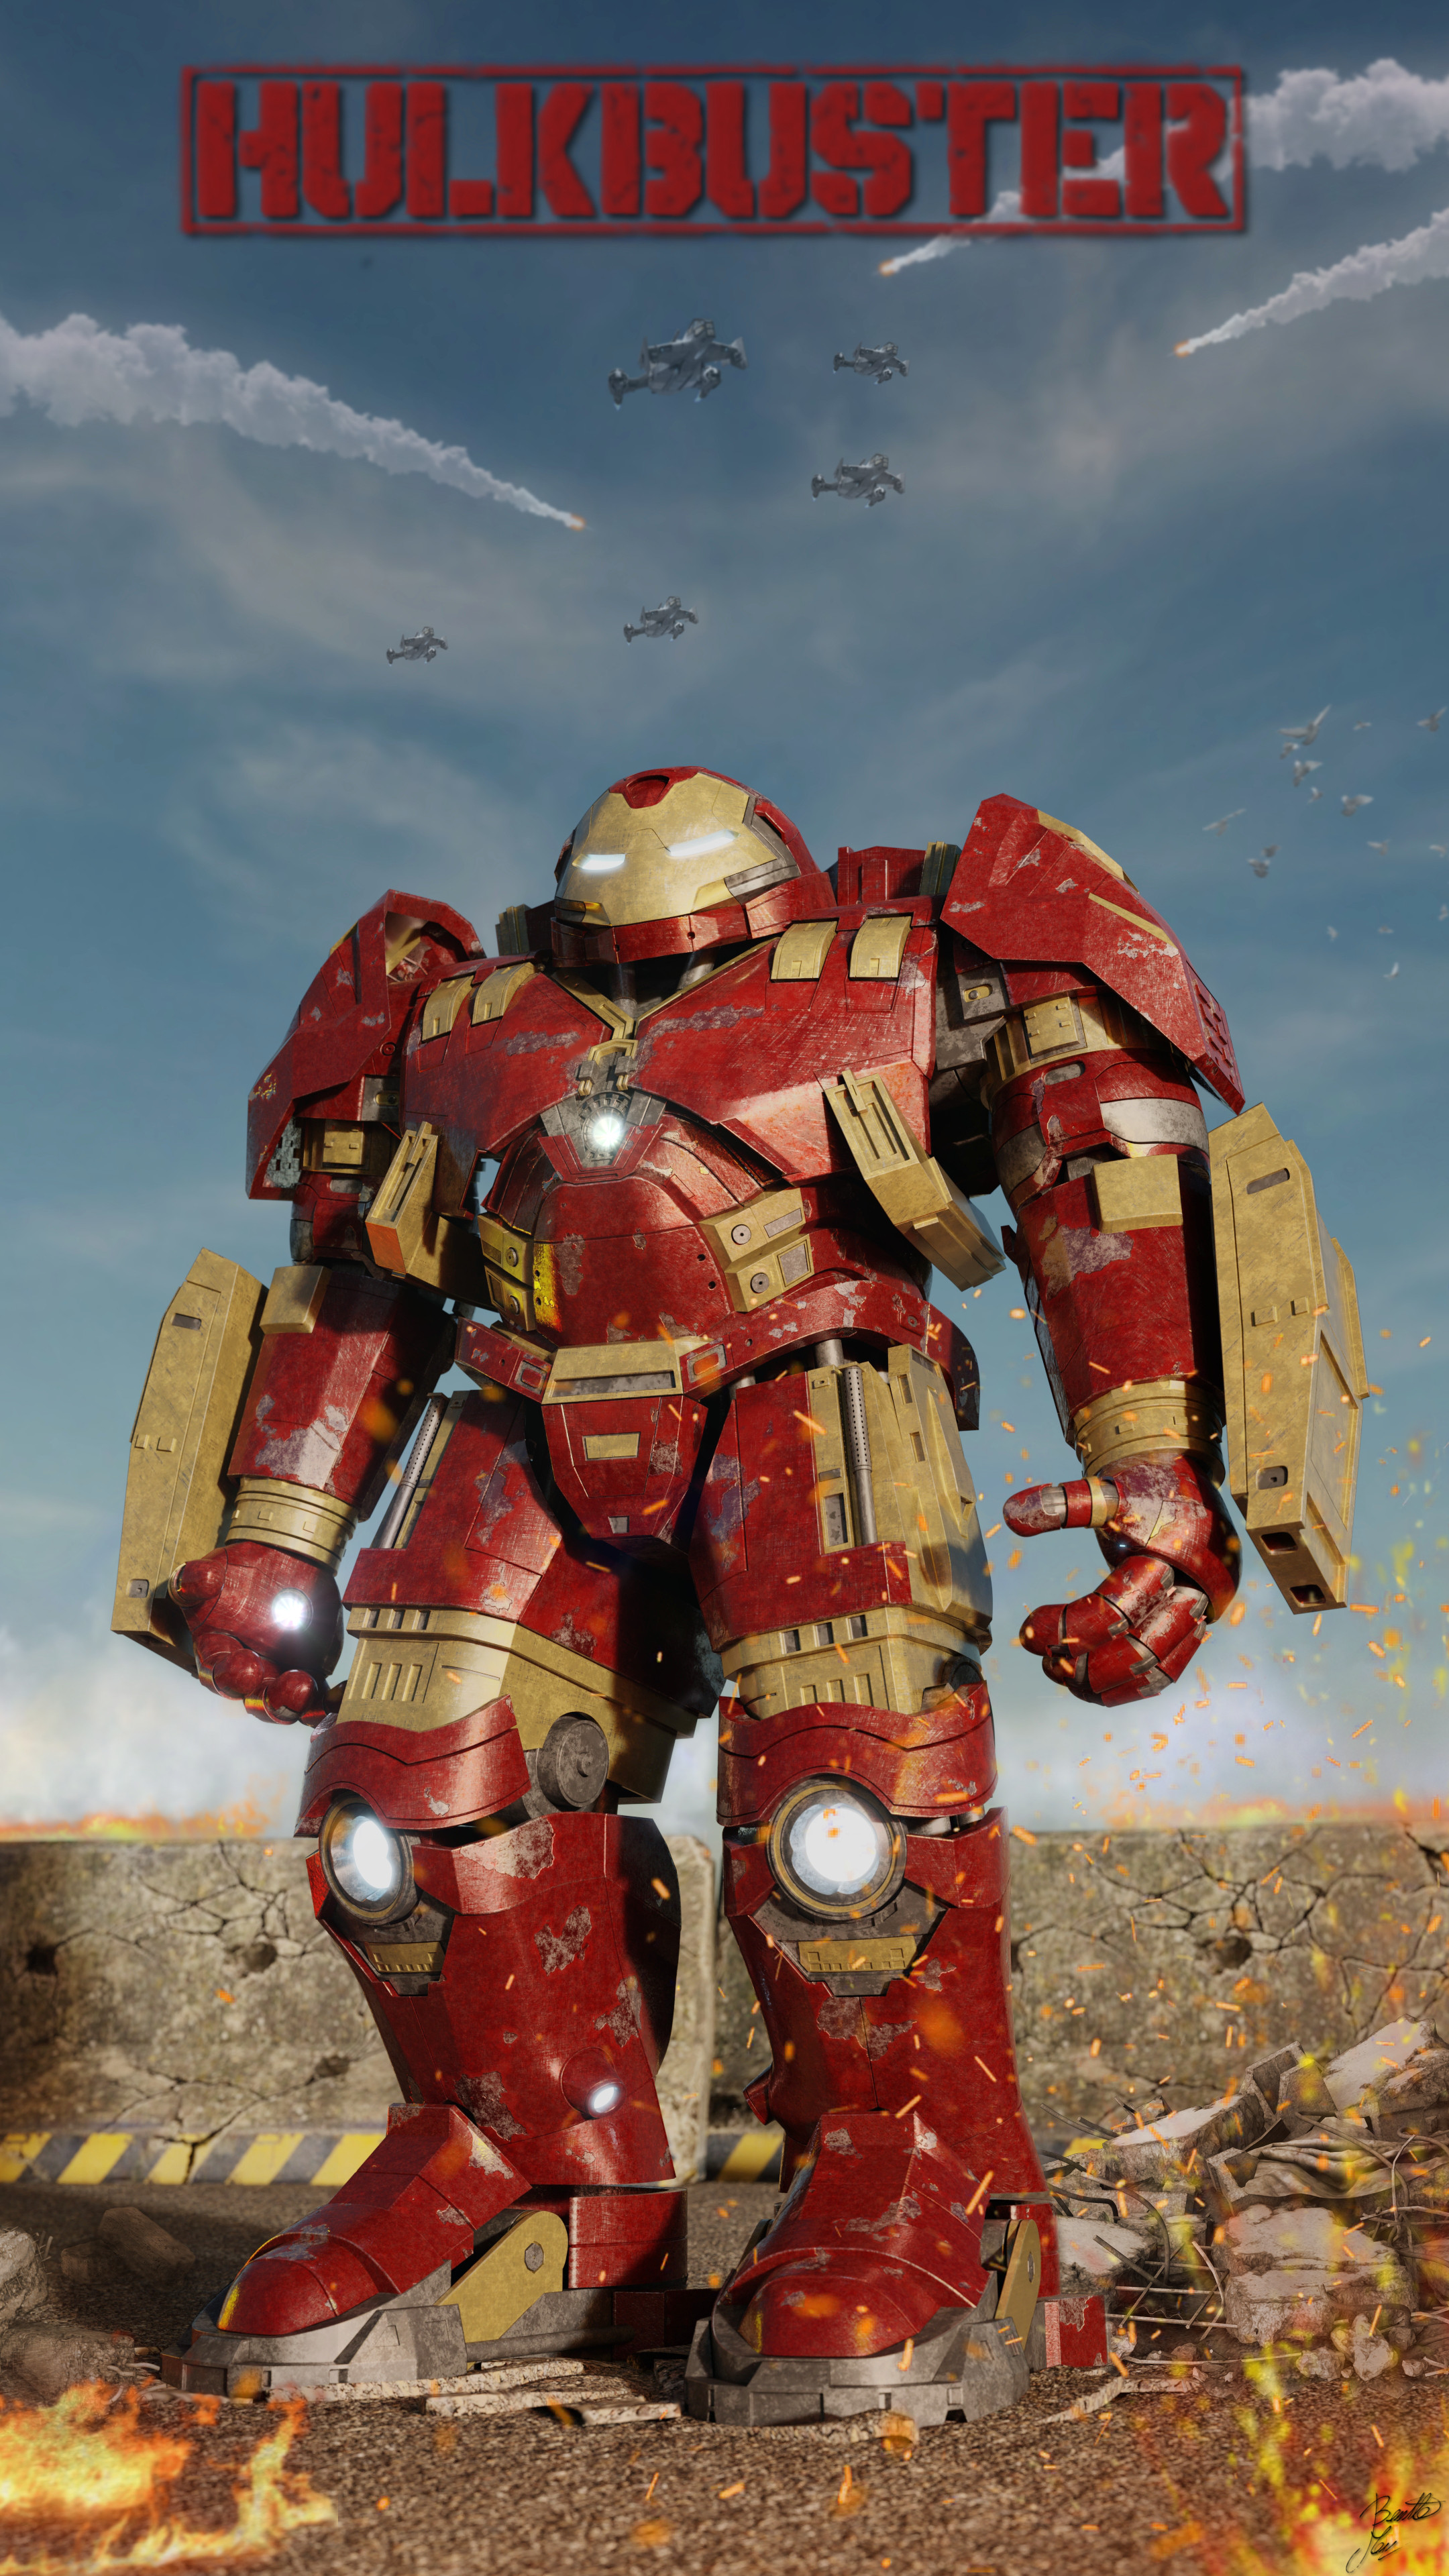 Powerful Iron Man Hulkbuster Armor Cosplay